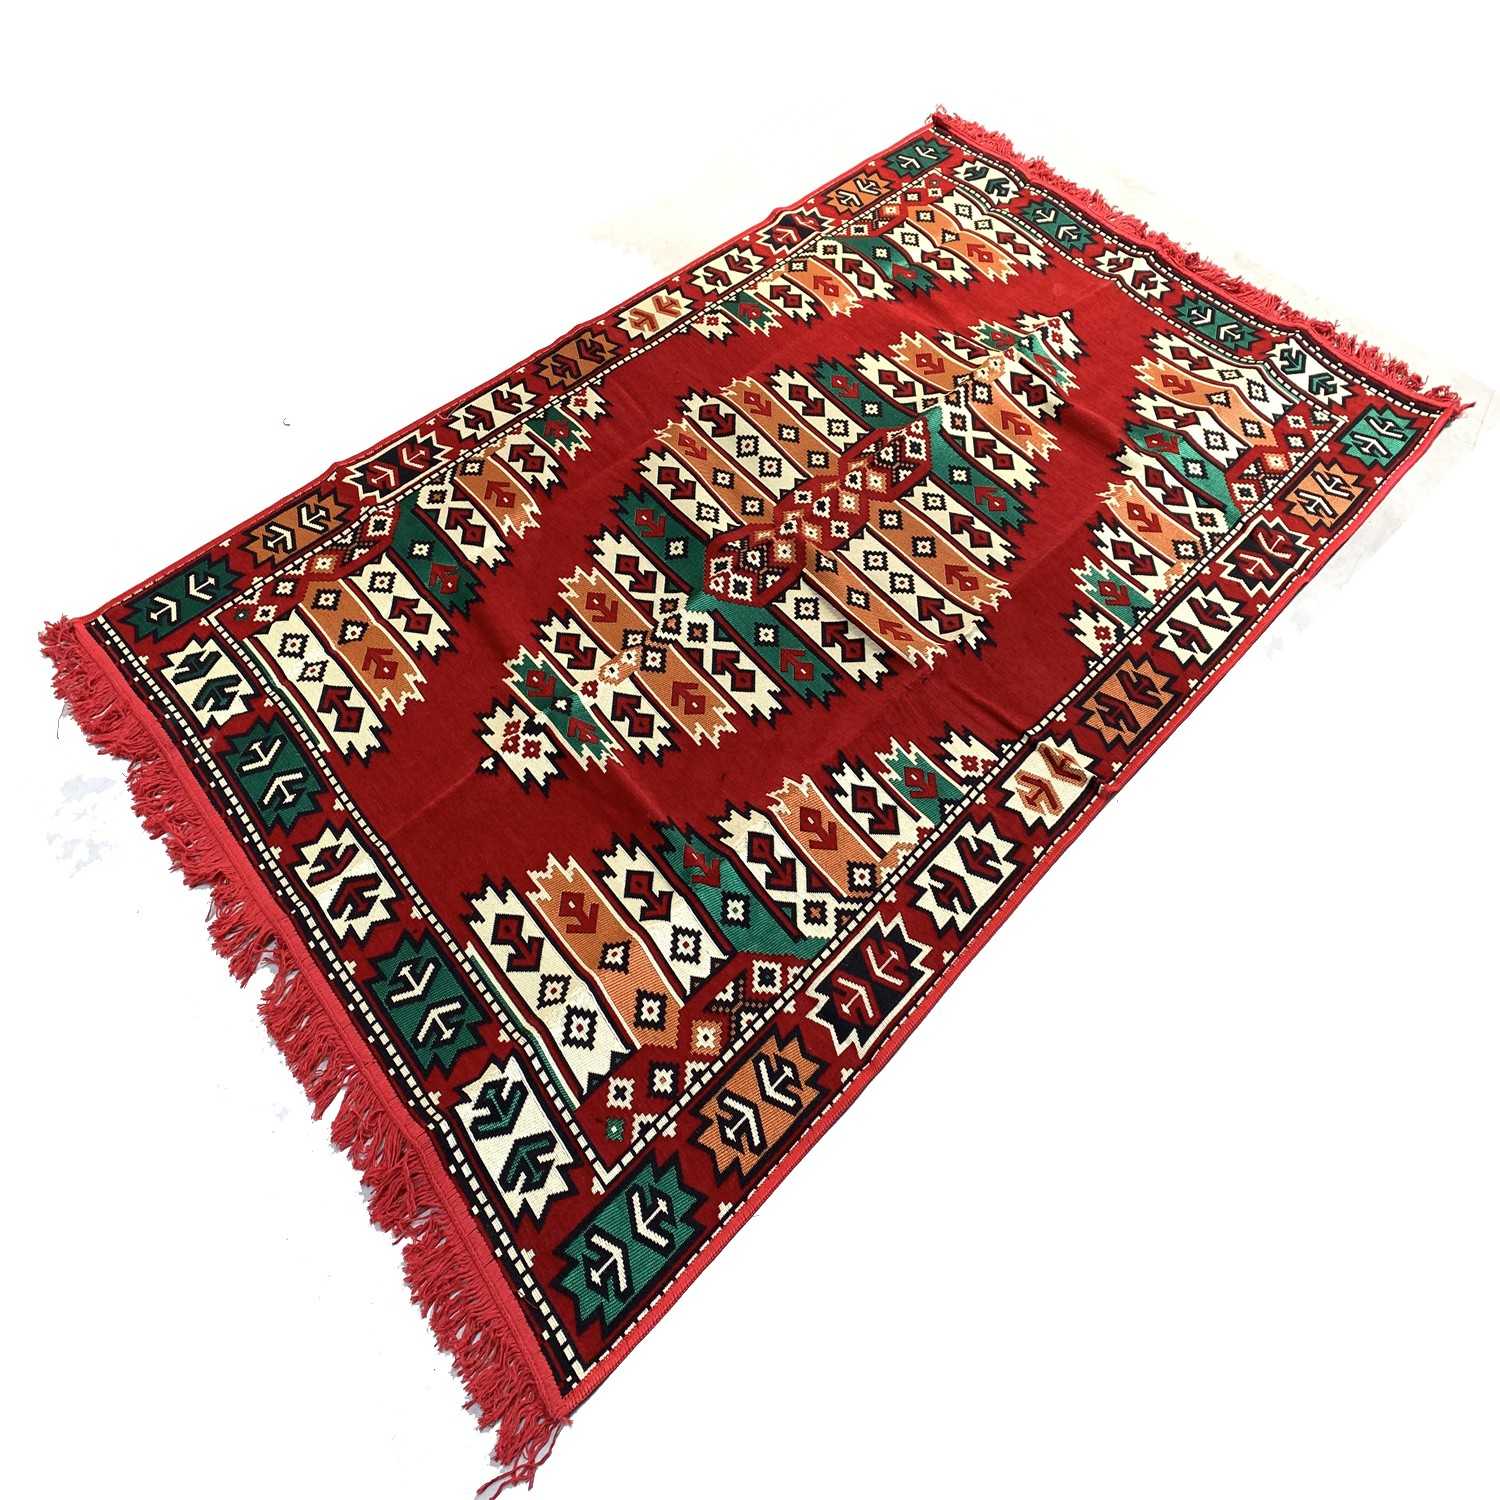 180 x 120 cm Machine woven oriental Turkish kilim rug